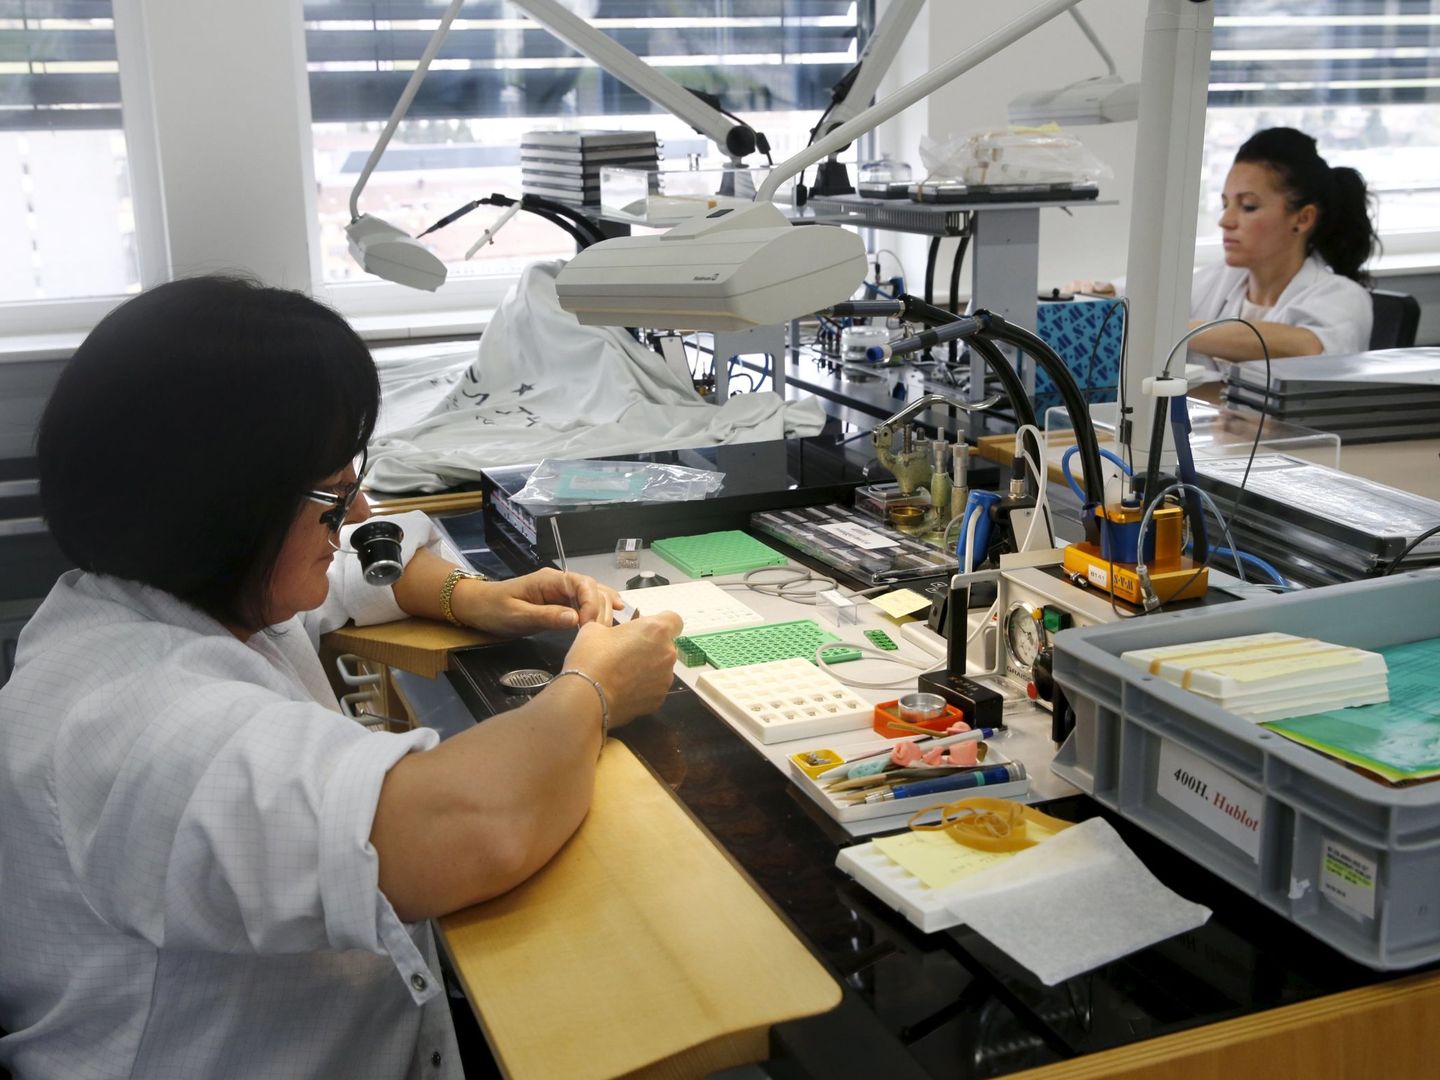 Trabajadores de la fábrica de relojes suizos Zenithen Le Locle, en abril de 2016 (Reuters)